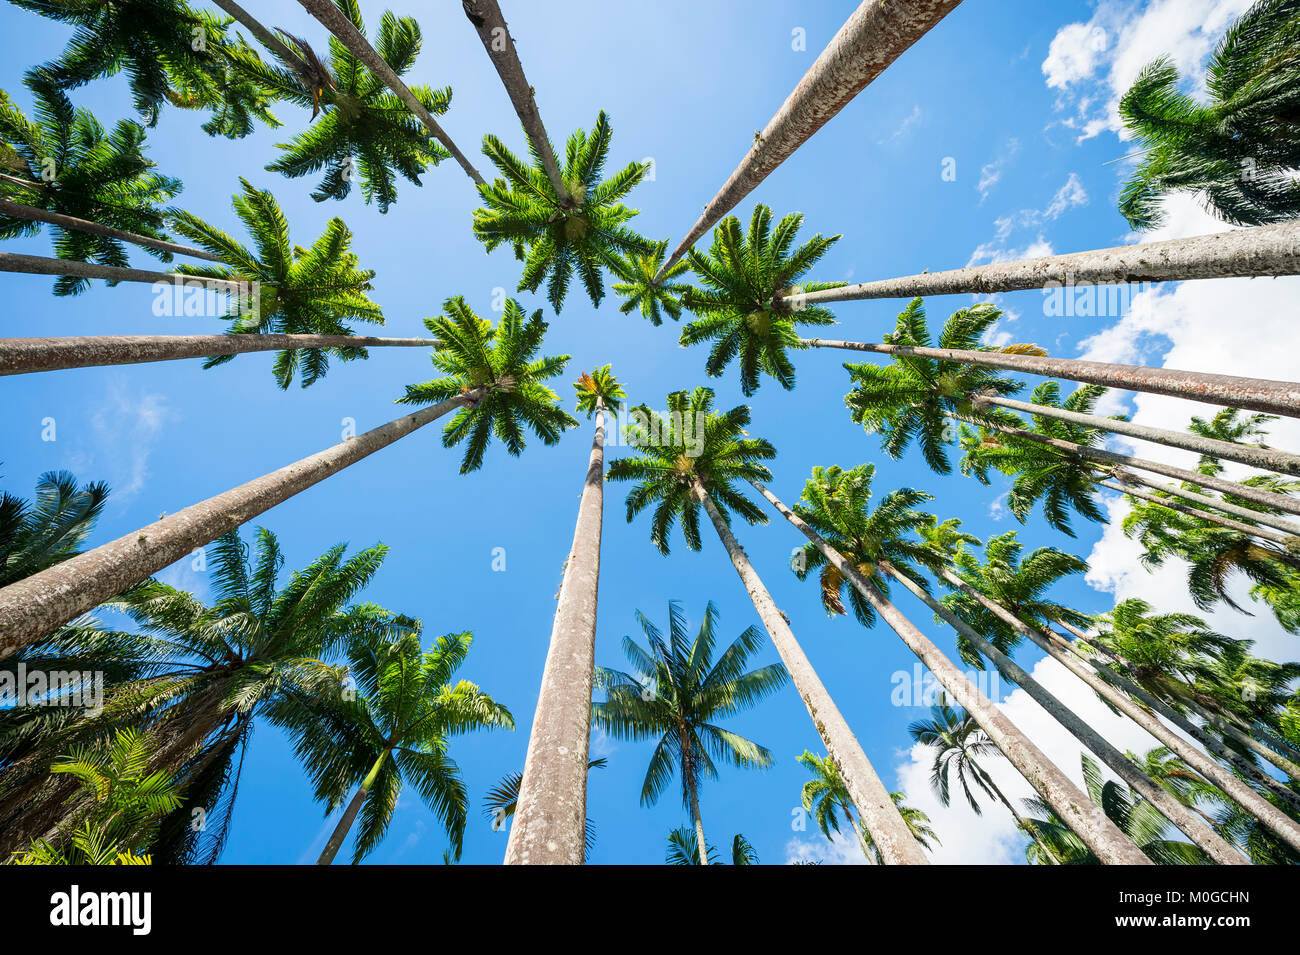 Avenue of tall royal palm trees soar into bright blue tropical sky in Rio de Janeiro, Brazil Stock Photo